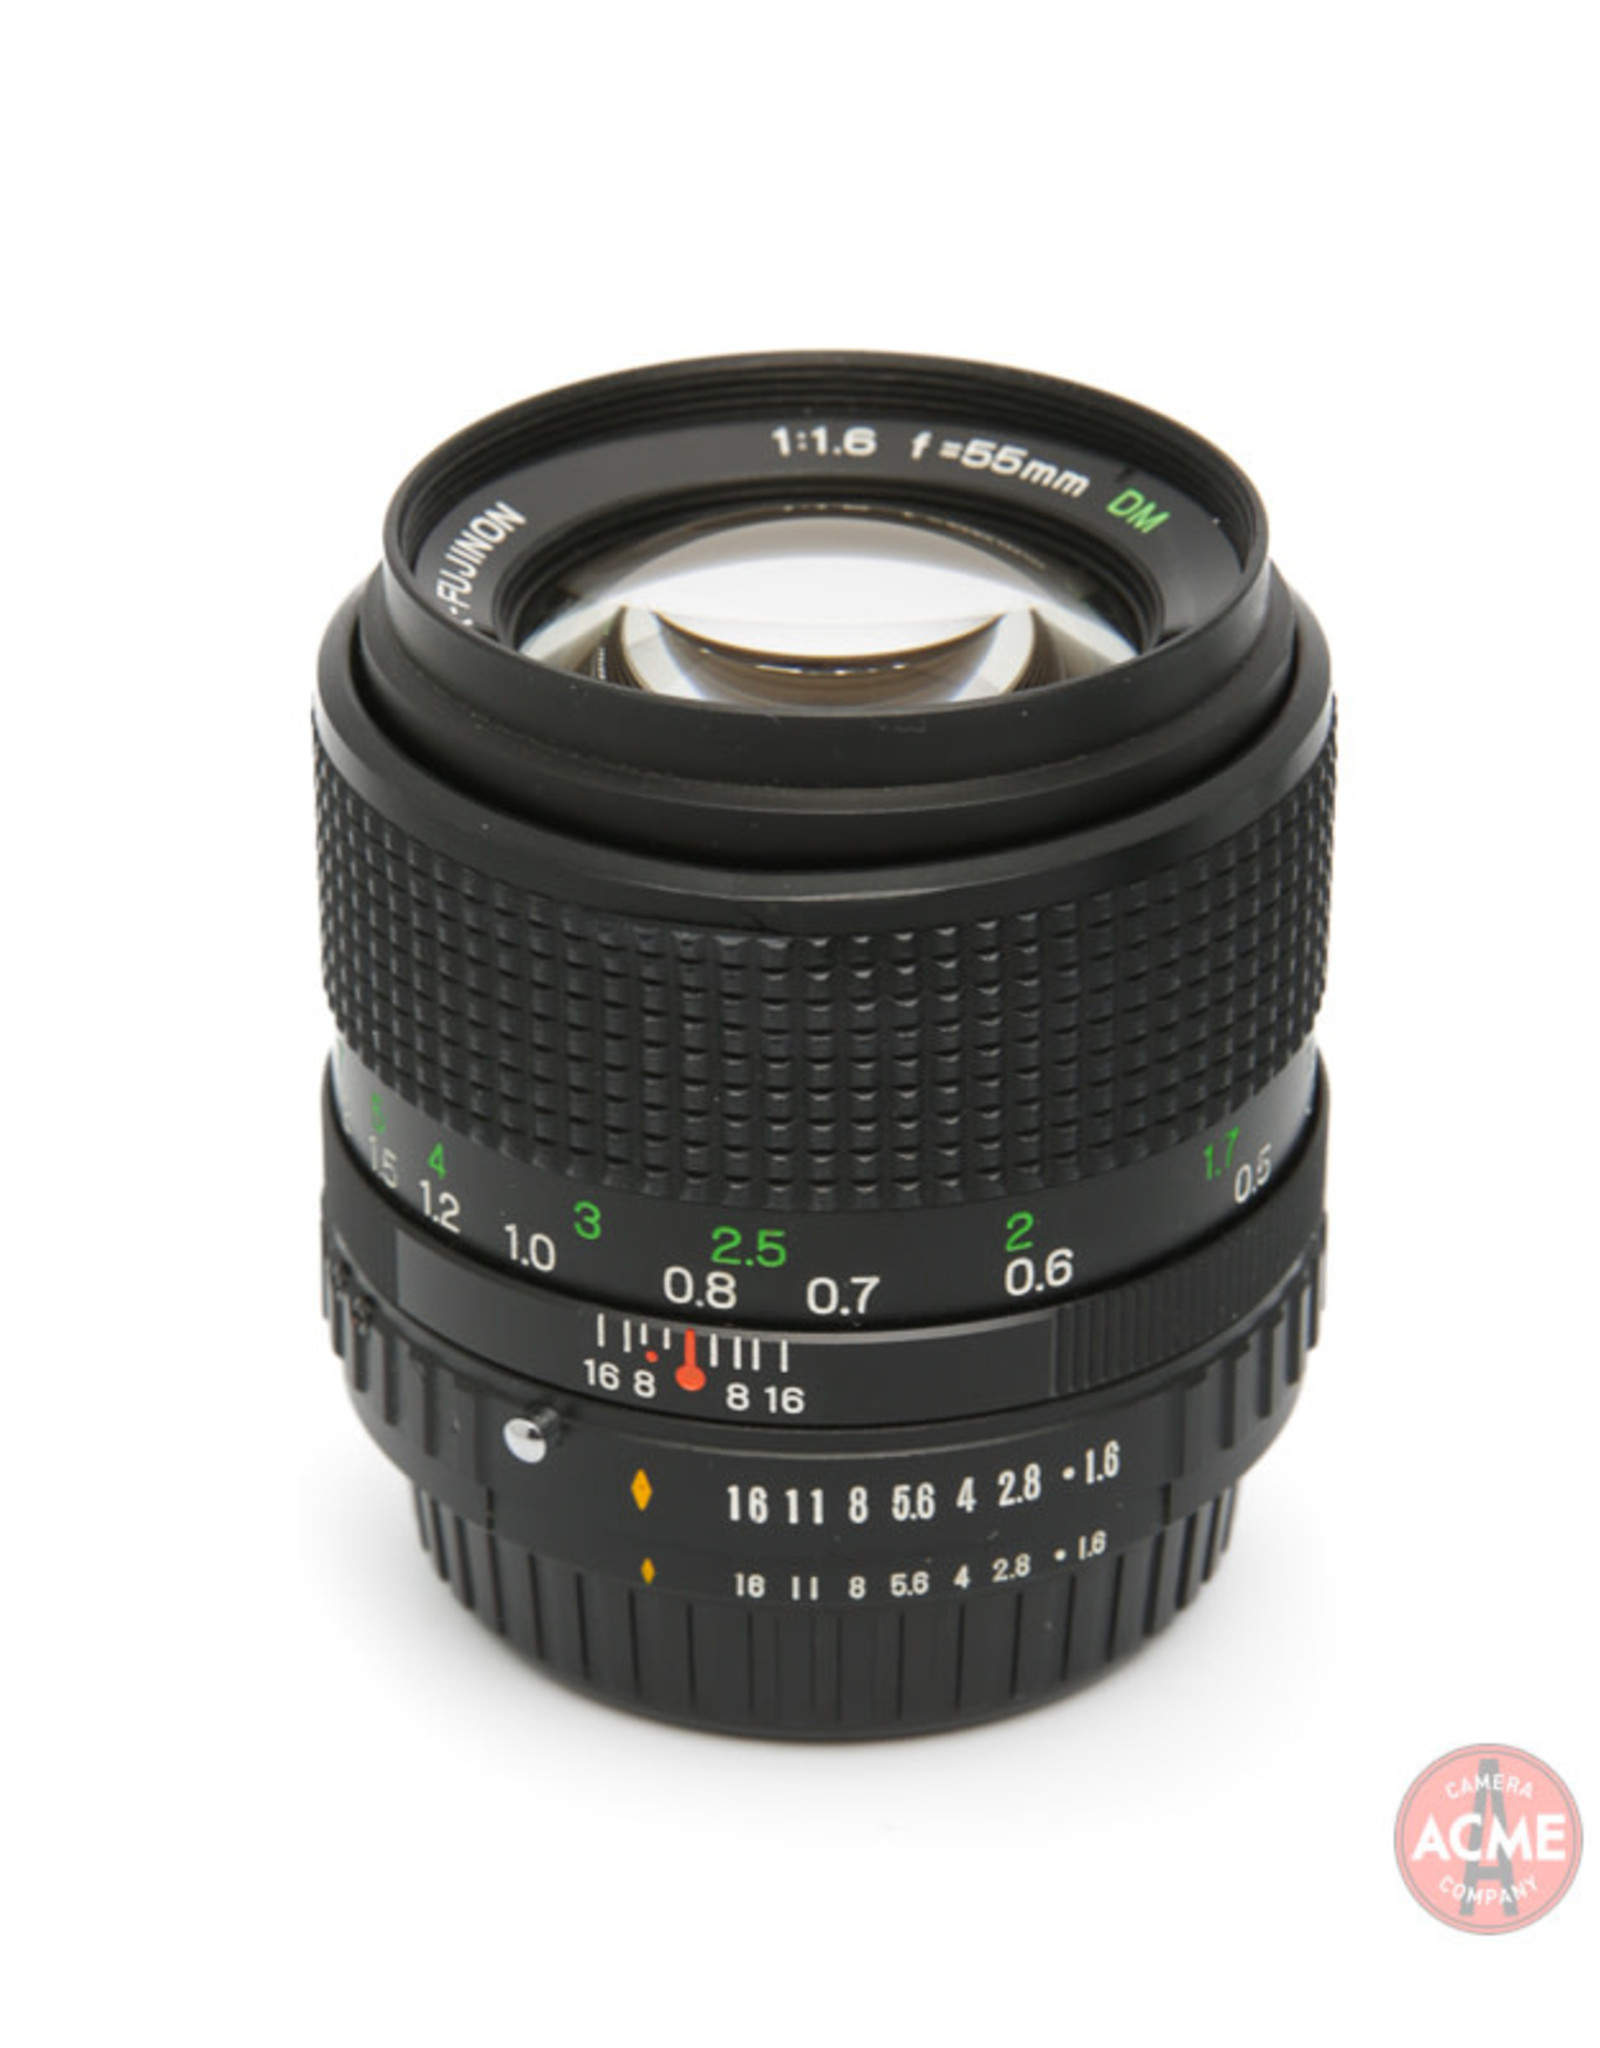 Fuji Fuji Fujinon 55mm f1.6 Fuji X Mount Lens (35mm camera)